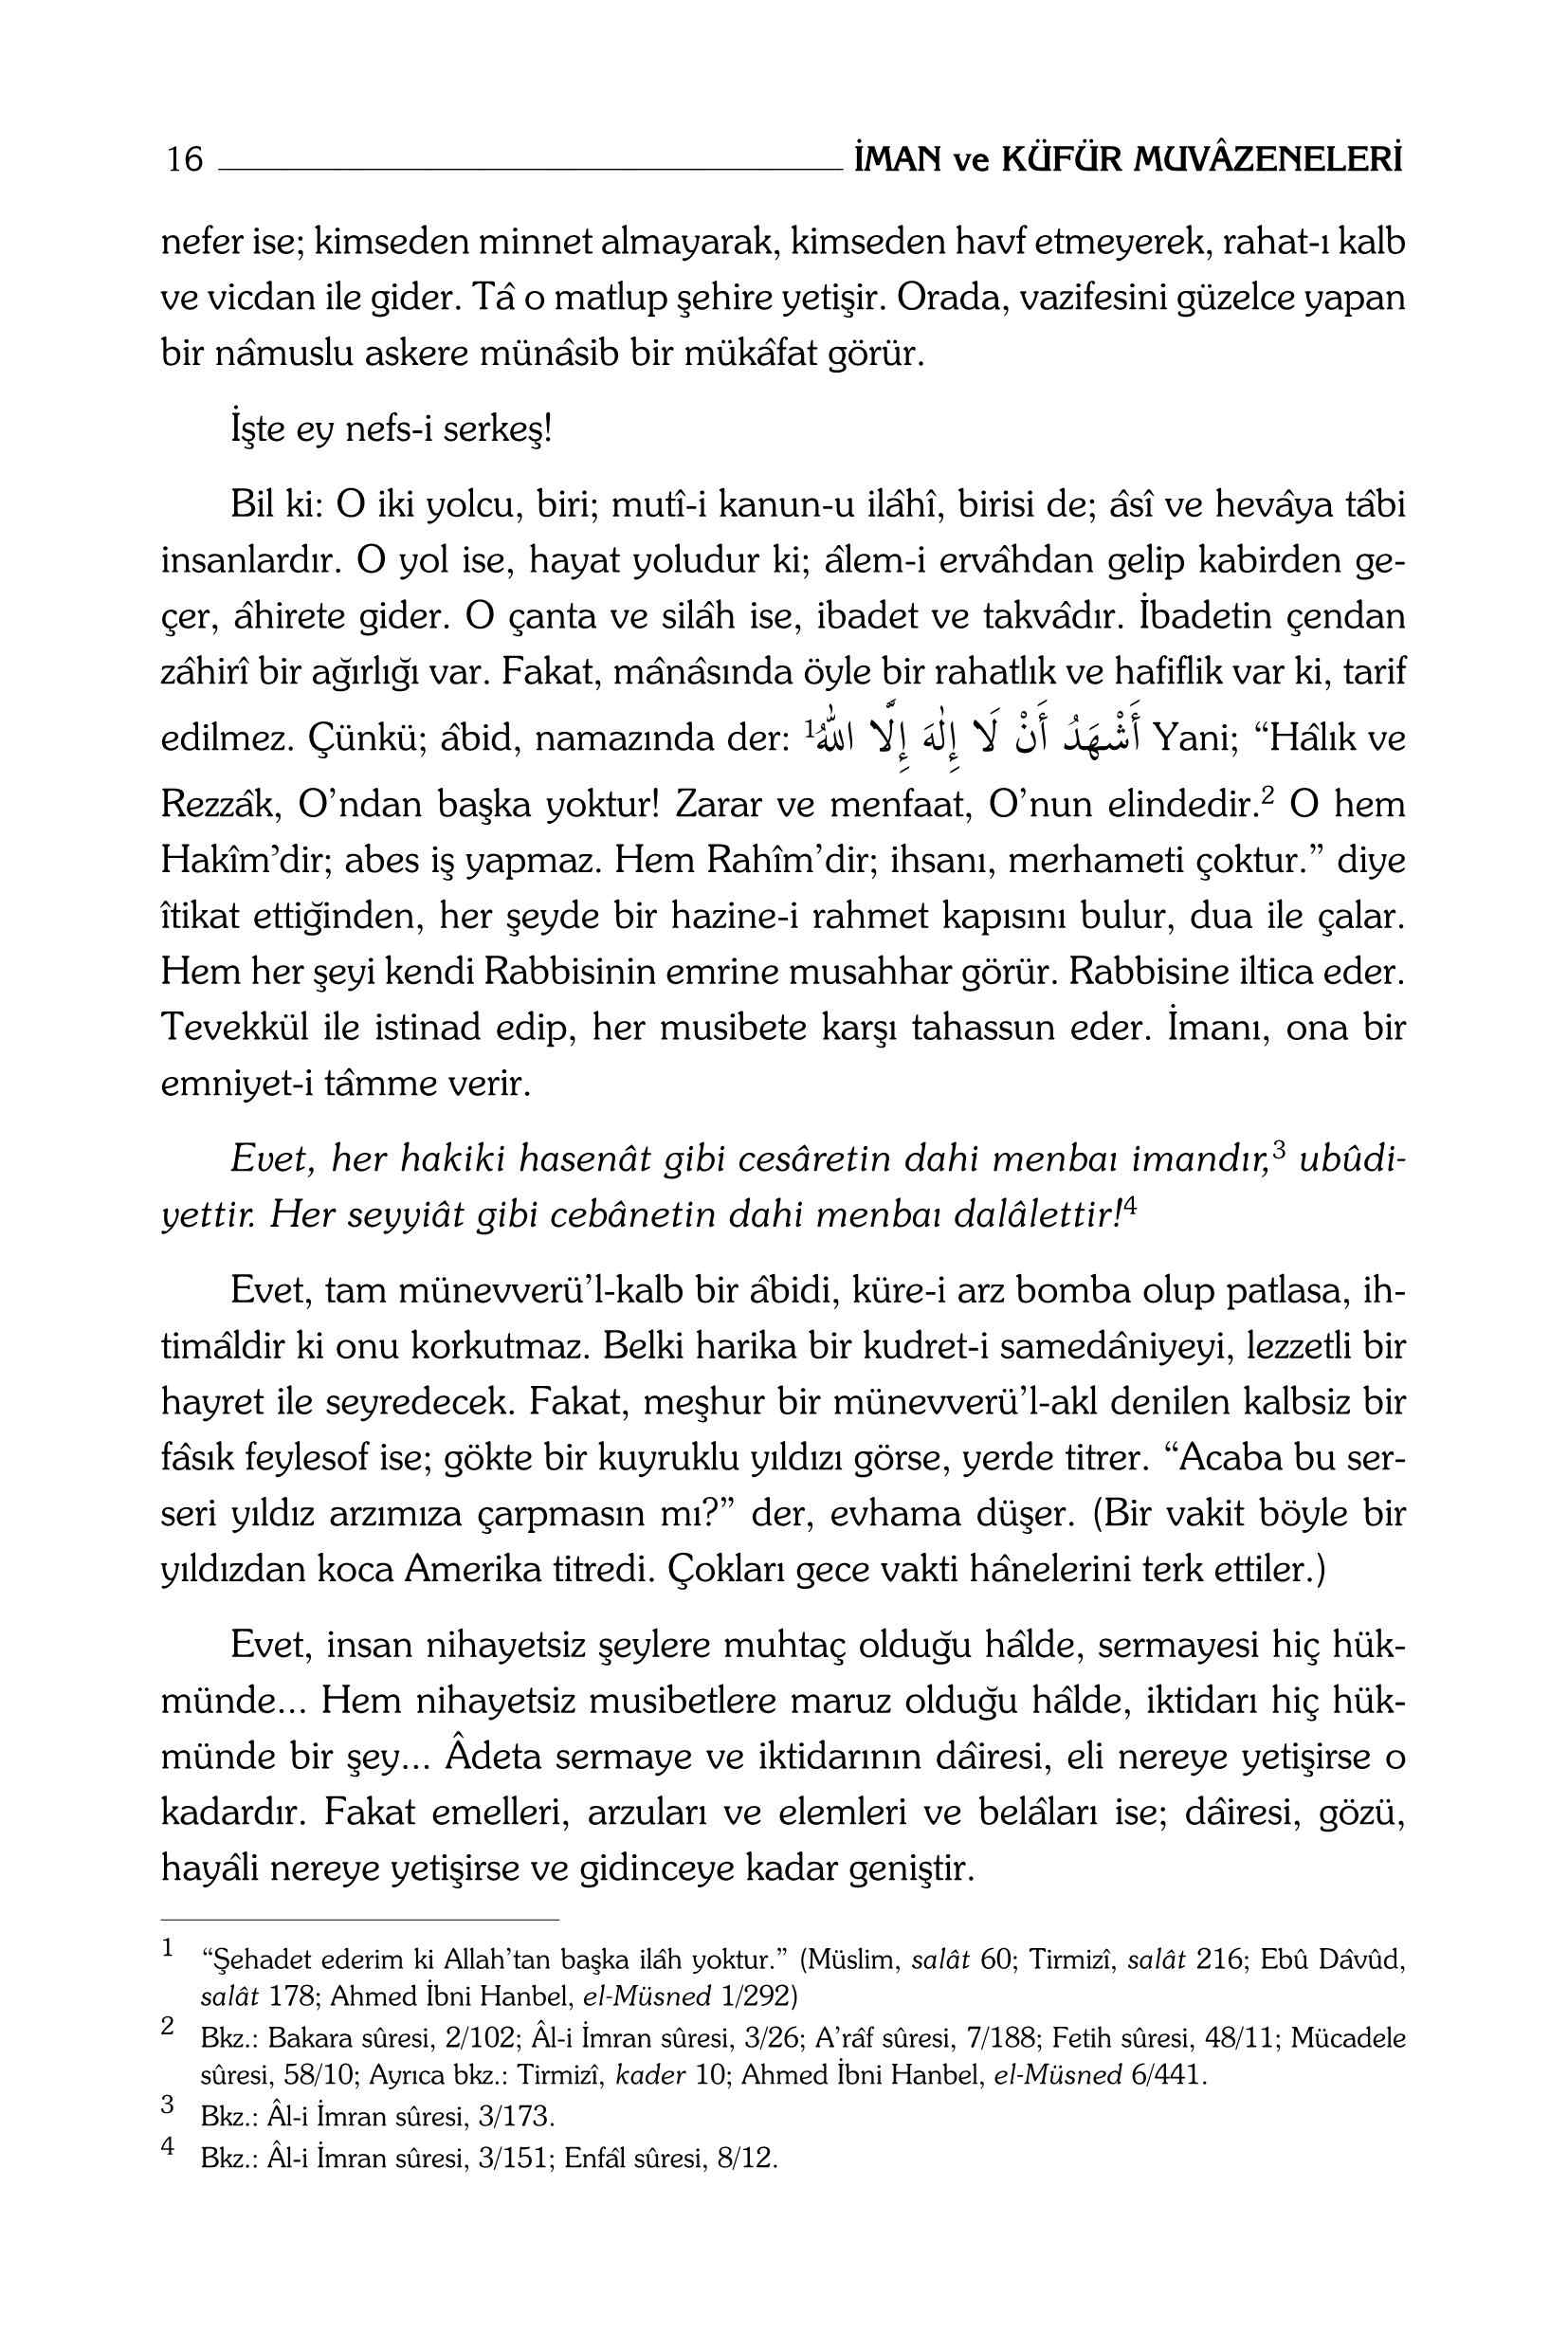 B Said Nursi - İman ve Kufur Muvazeneleri - SahdamarY.pdf, 219-Sayfa 